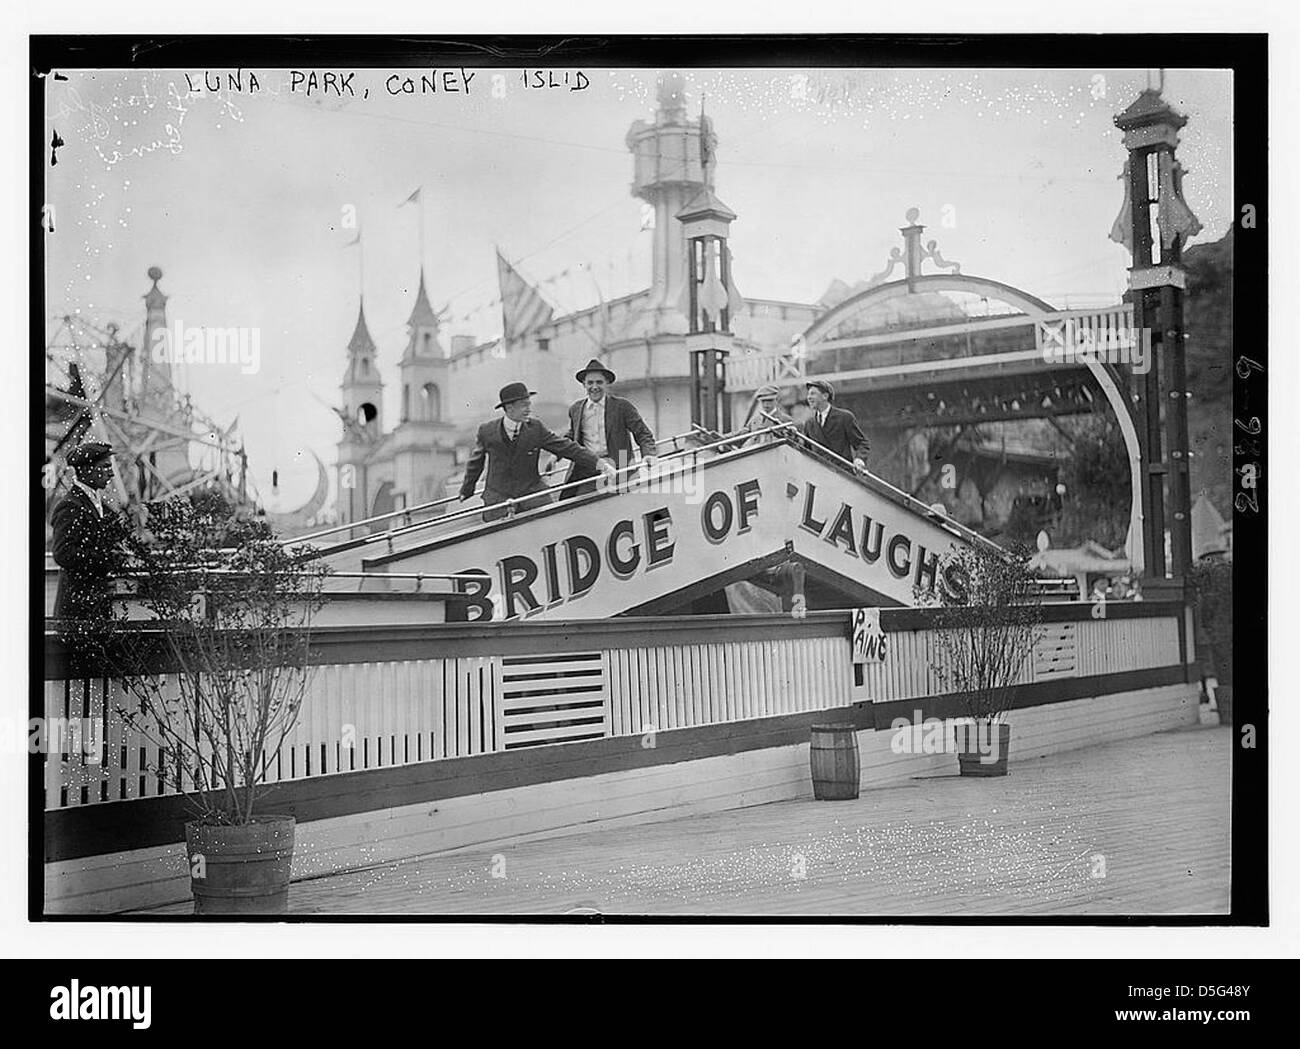 Luna Park, Coney Isl. (LOC) Banque D'Images